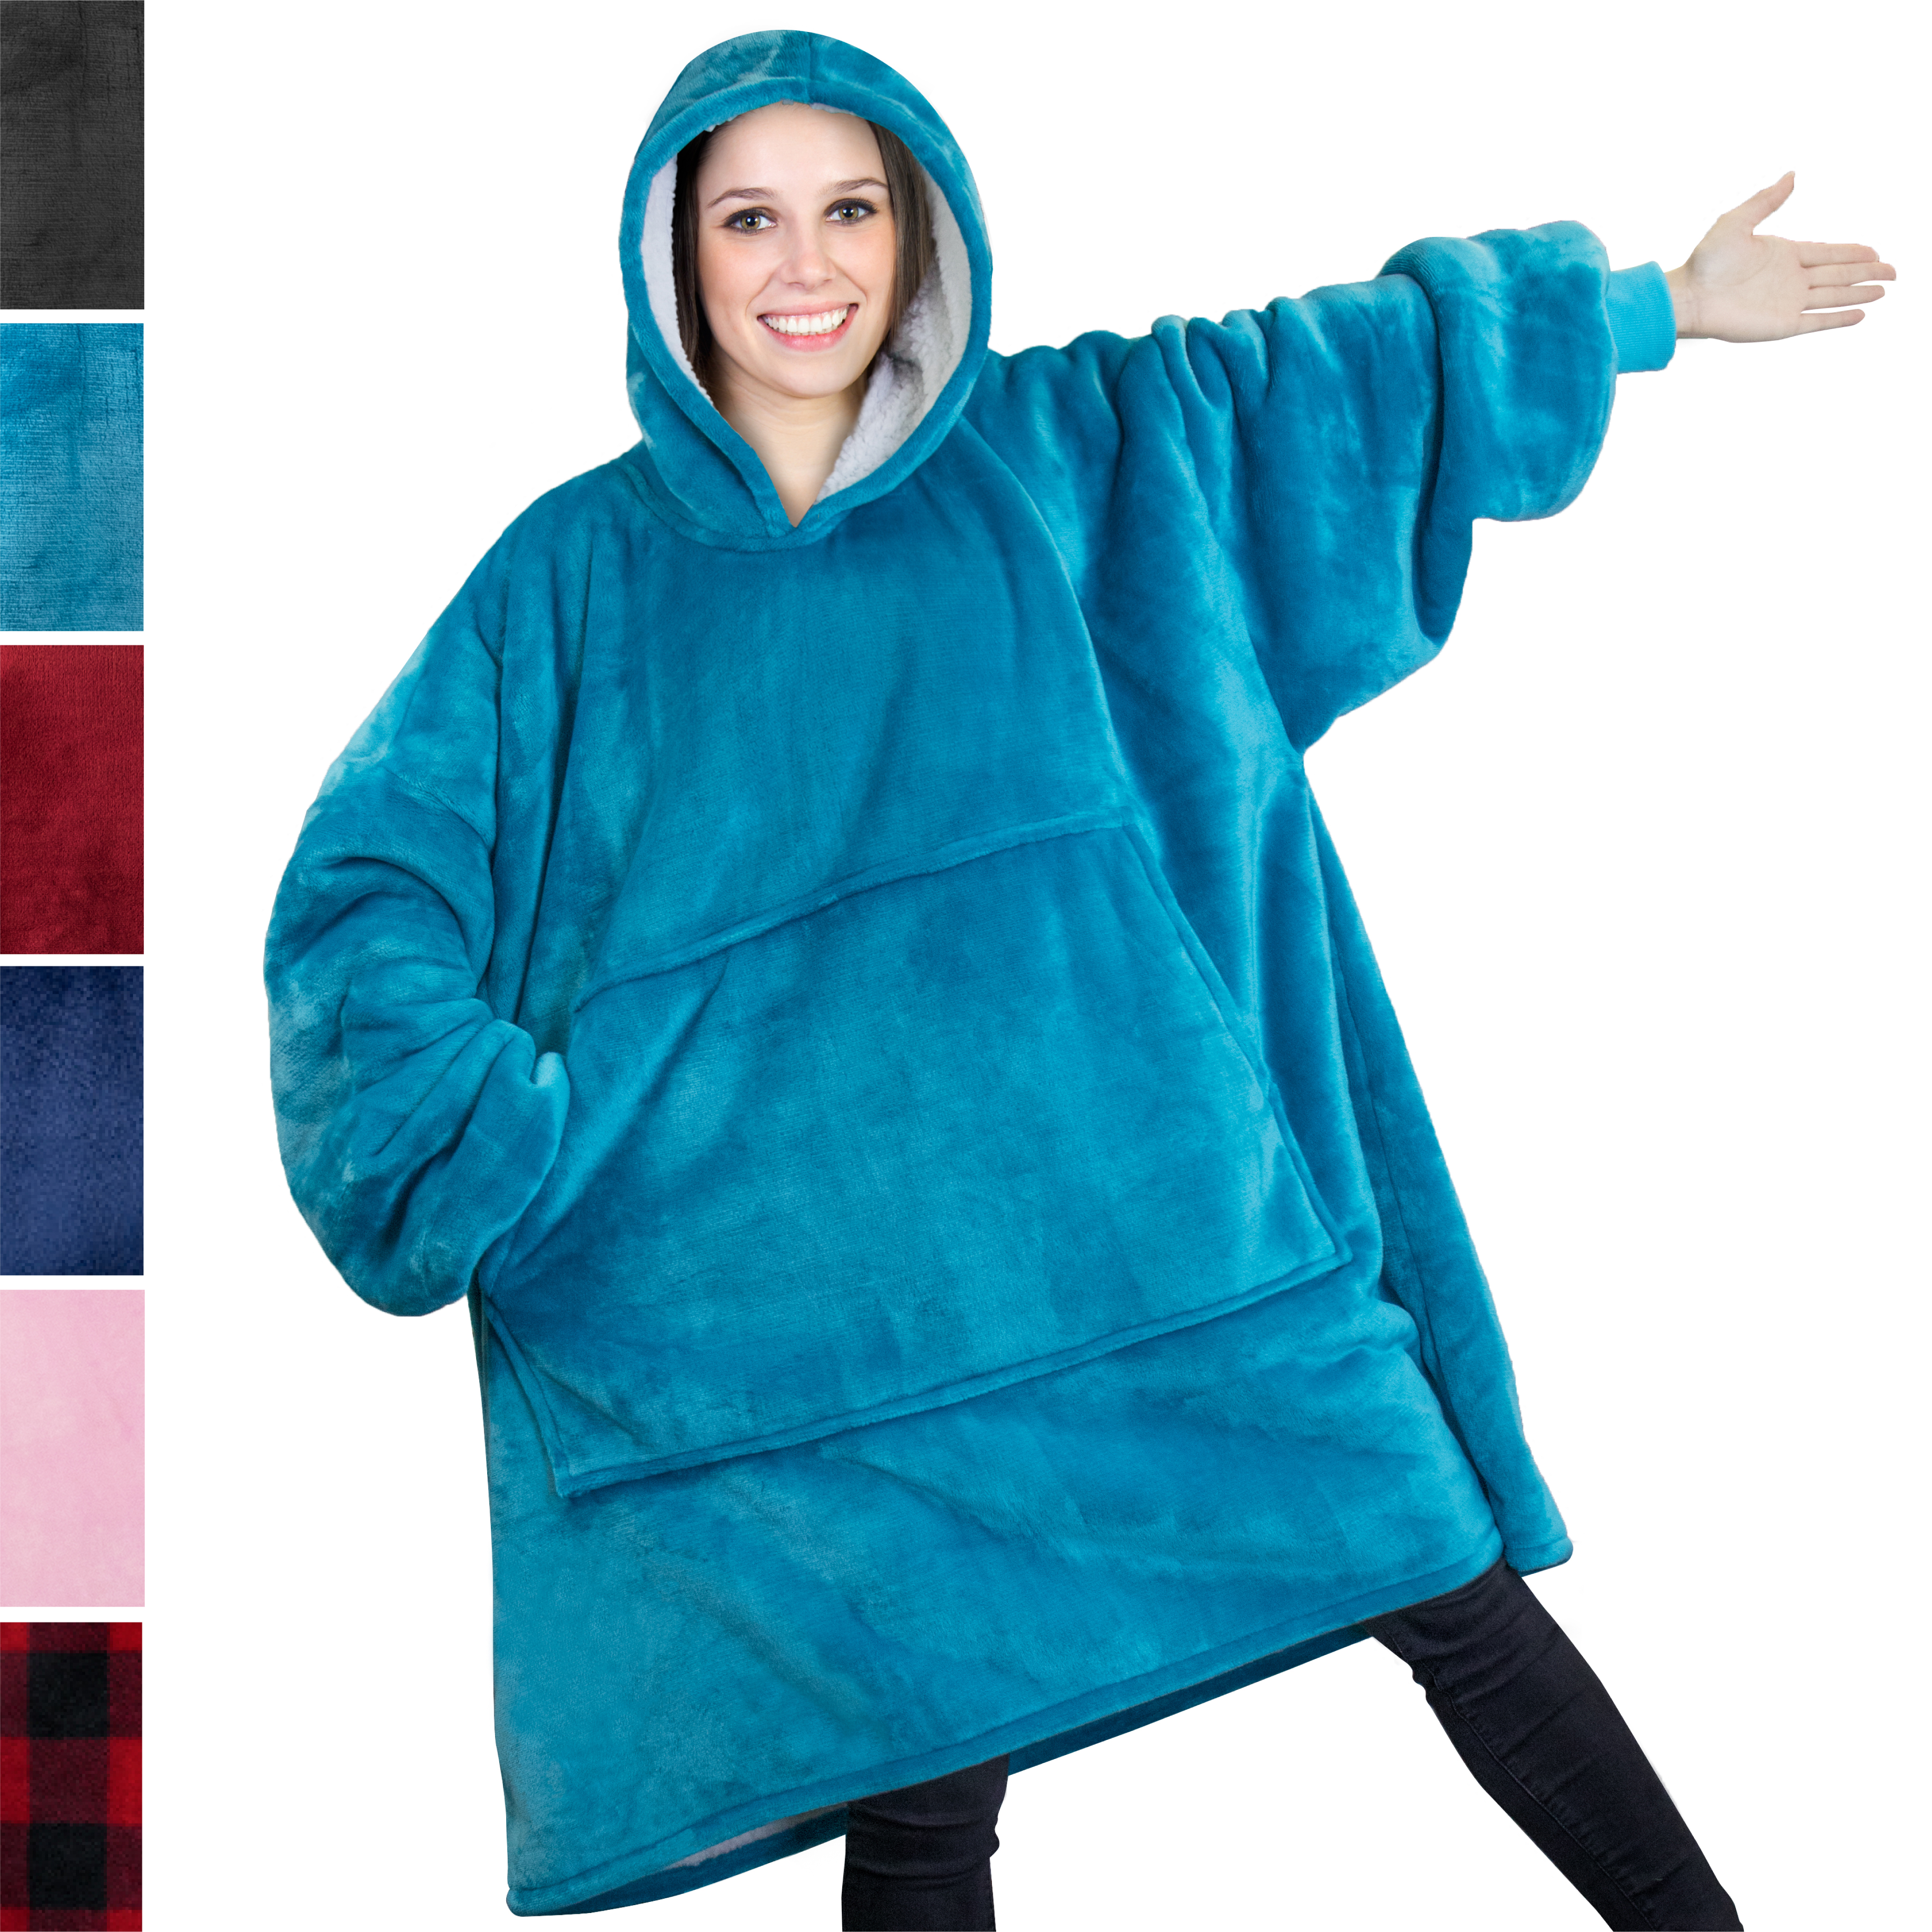 Oversized Blanket Hoodie,Wearable Blanket Sweatshirt Hoodie for Women and Men,Soft Sherpa FLeece Giant Hooded Oversized Double Plush Hooded Top with Warm Front Pocket